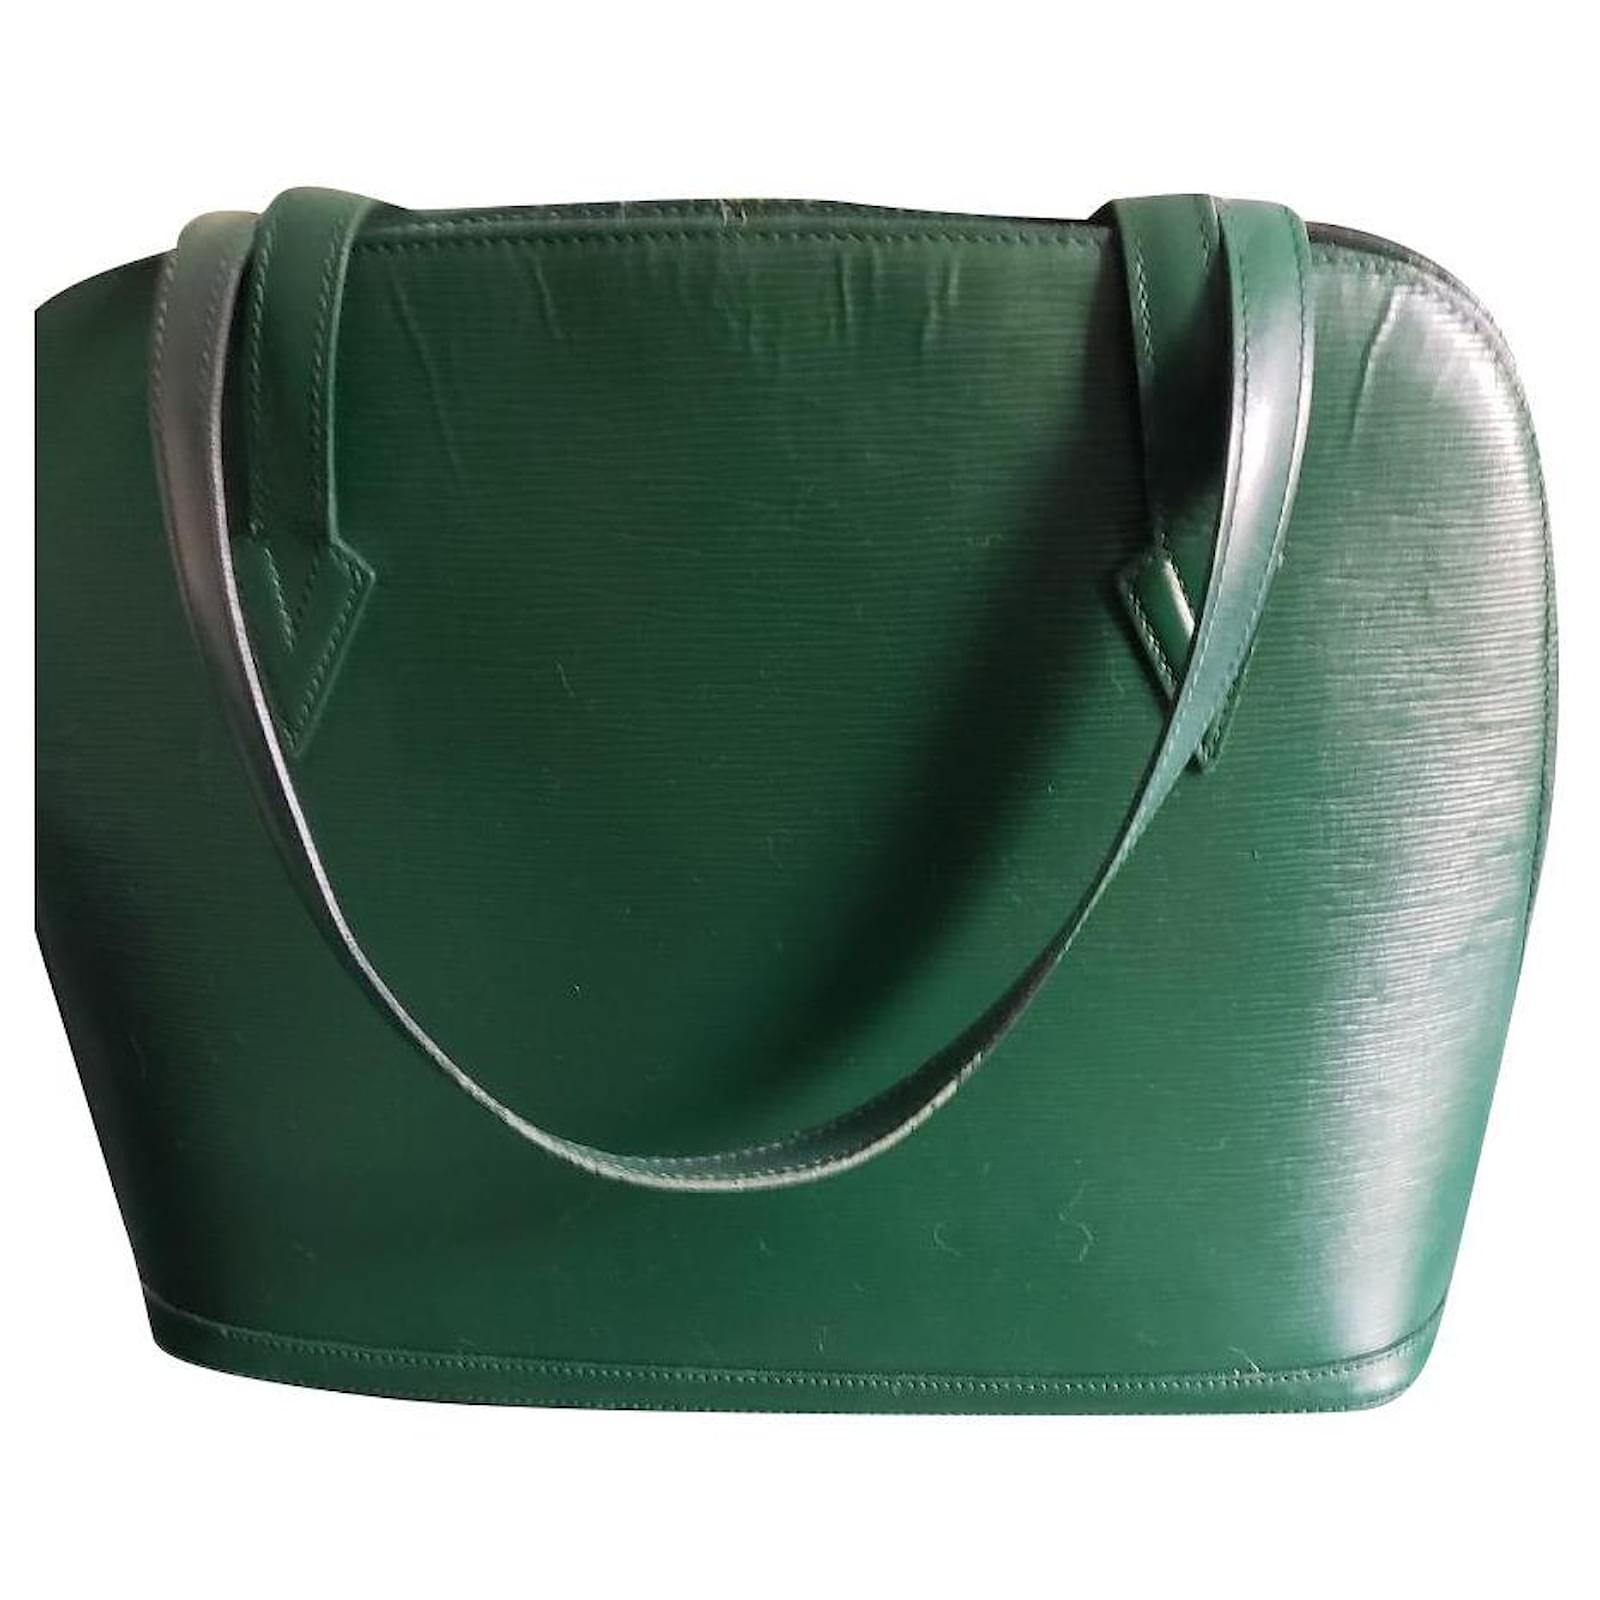 Vintage Louis Vuitton Lussac Green Epi Leather